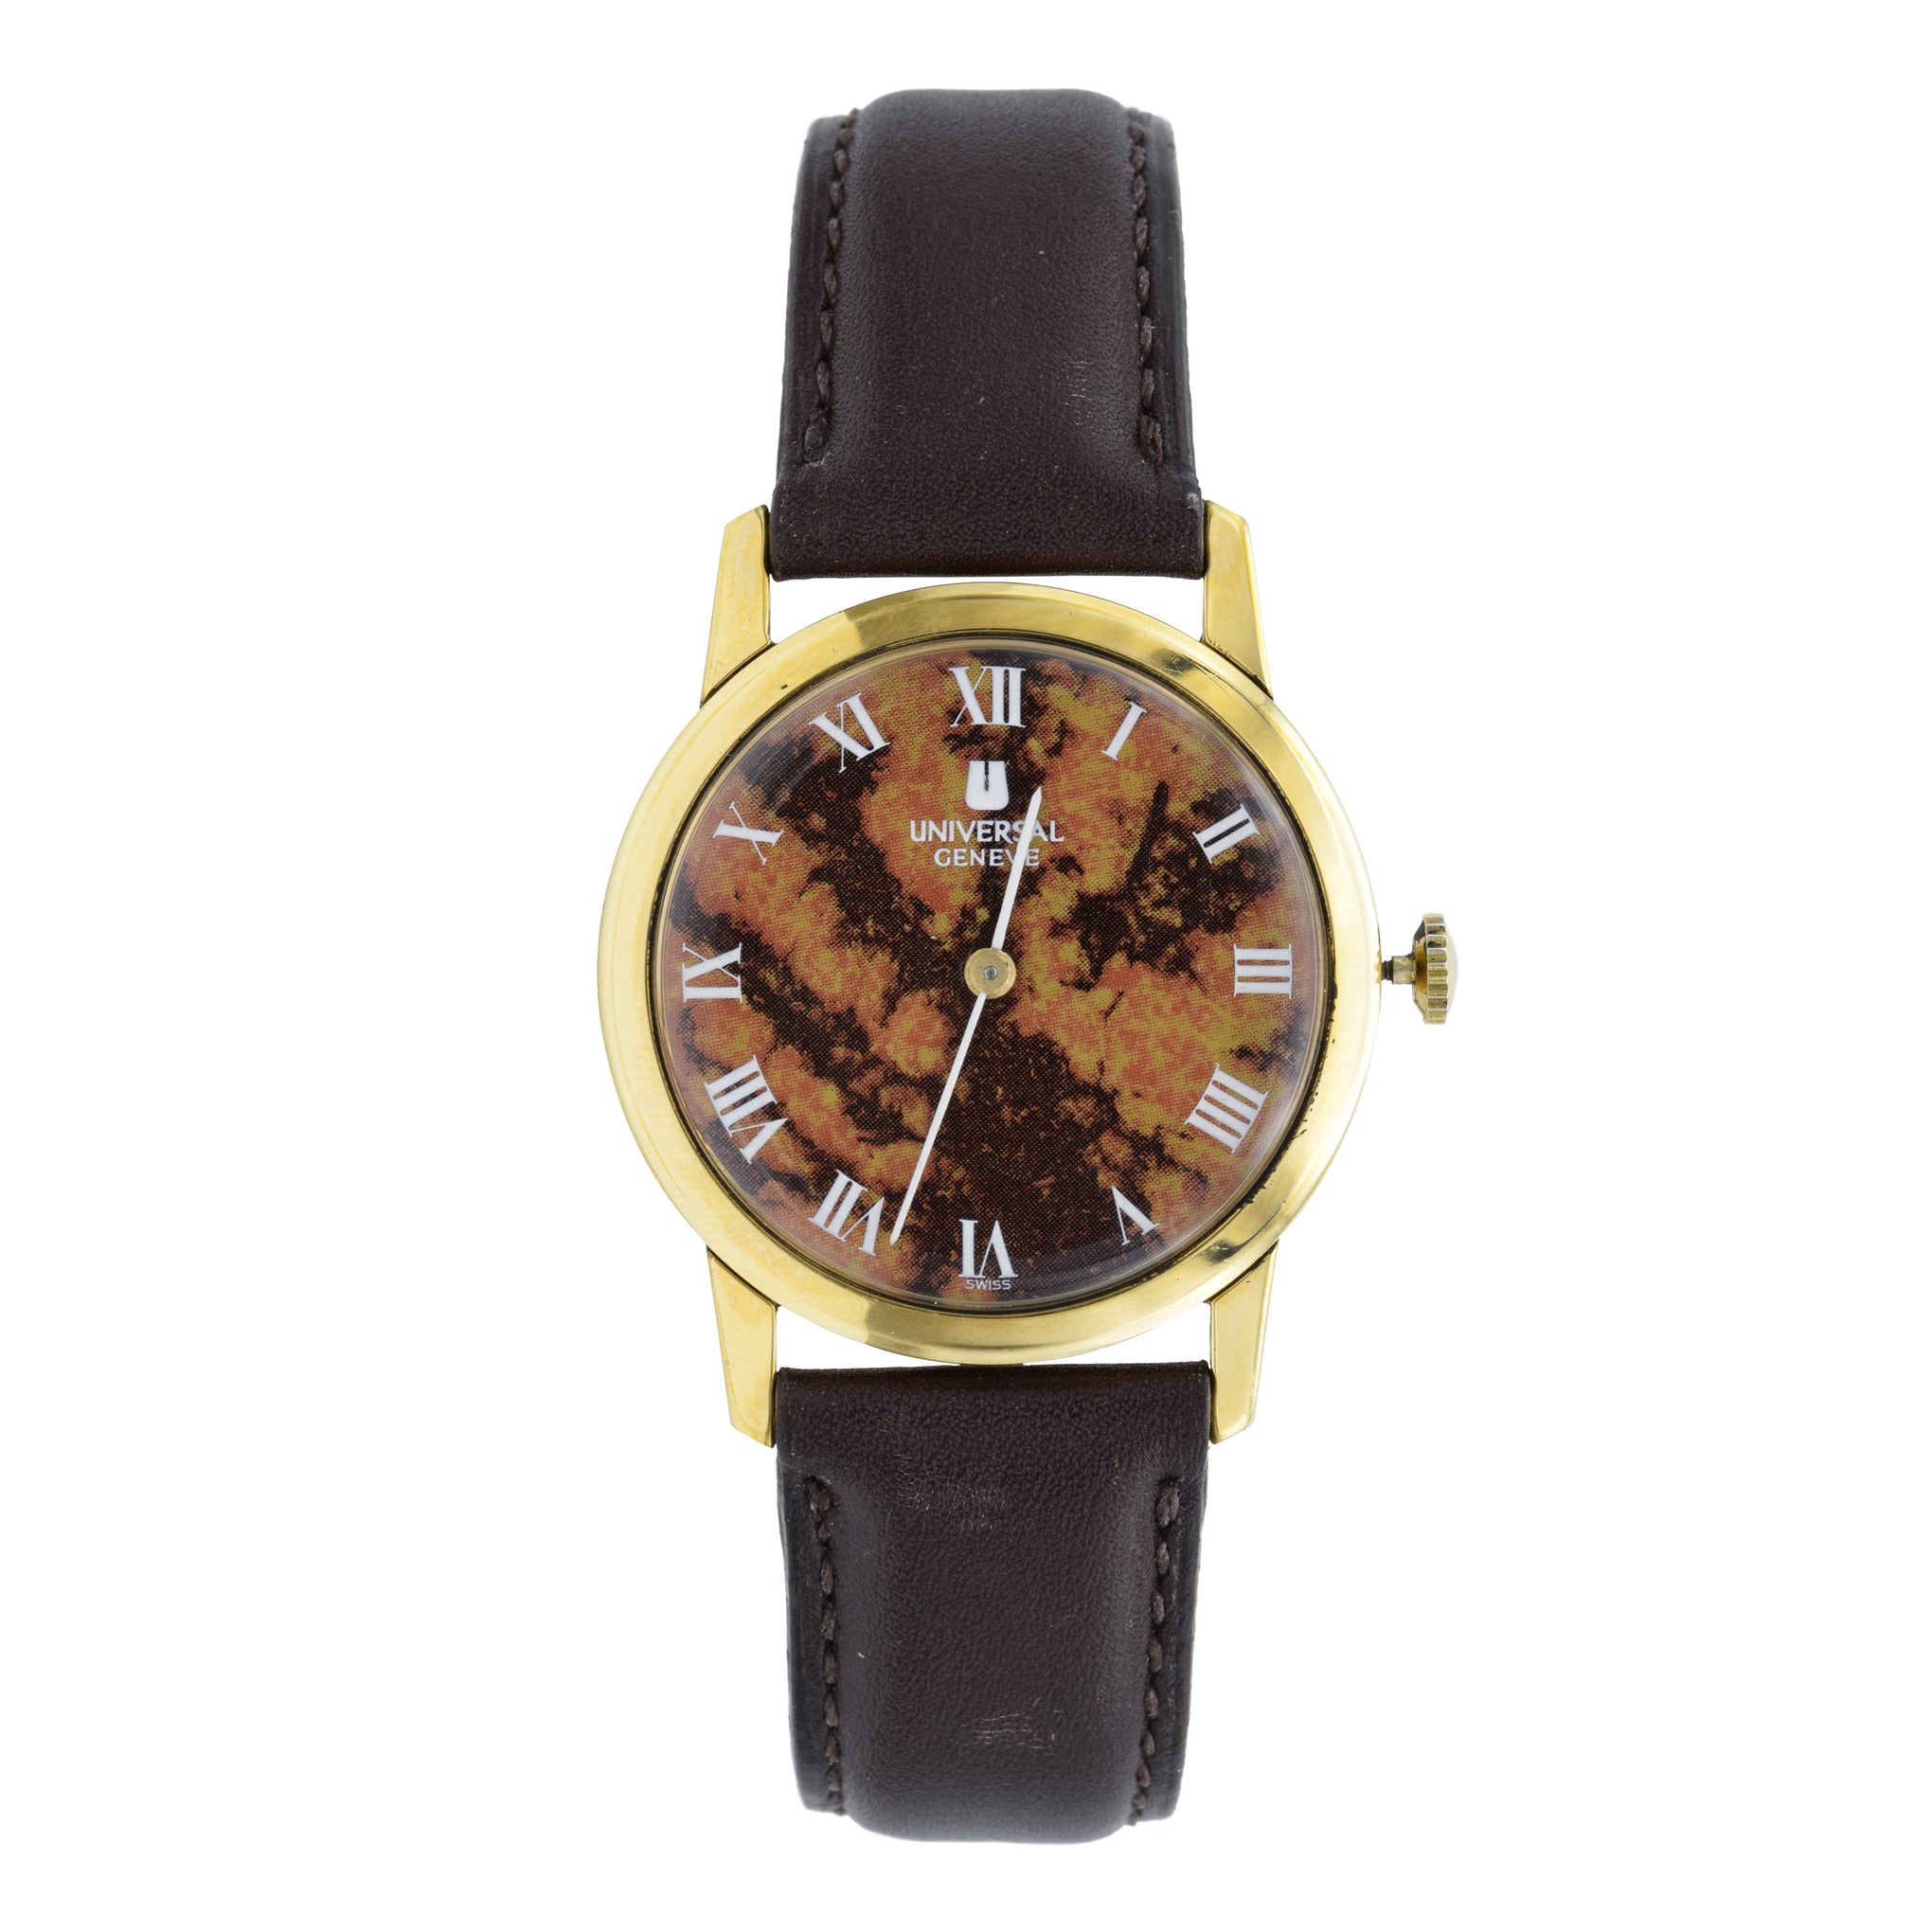 Vintage 1960s Universal Genève Watch